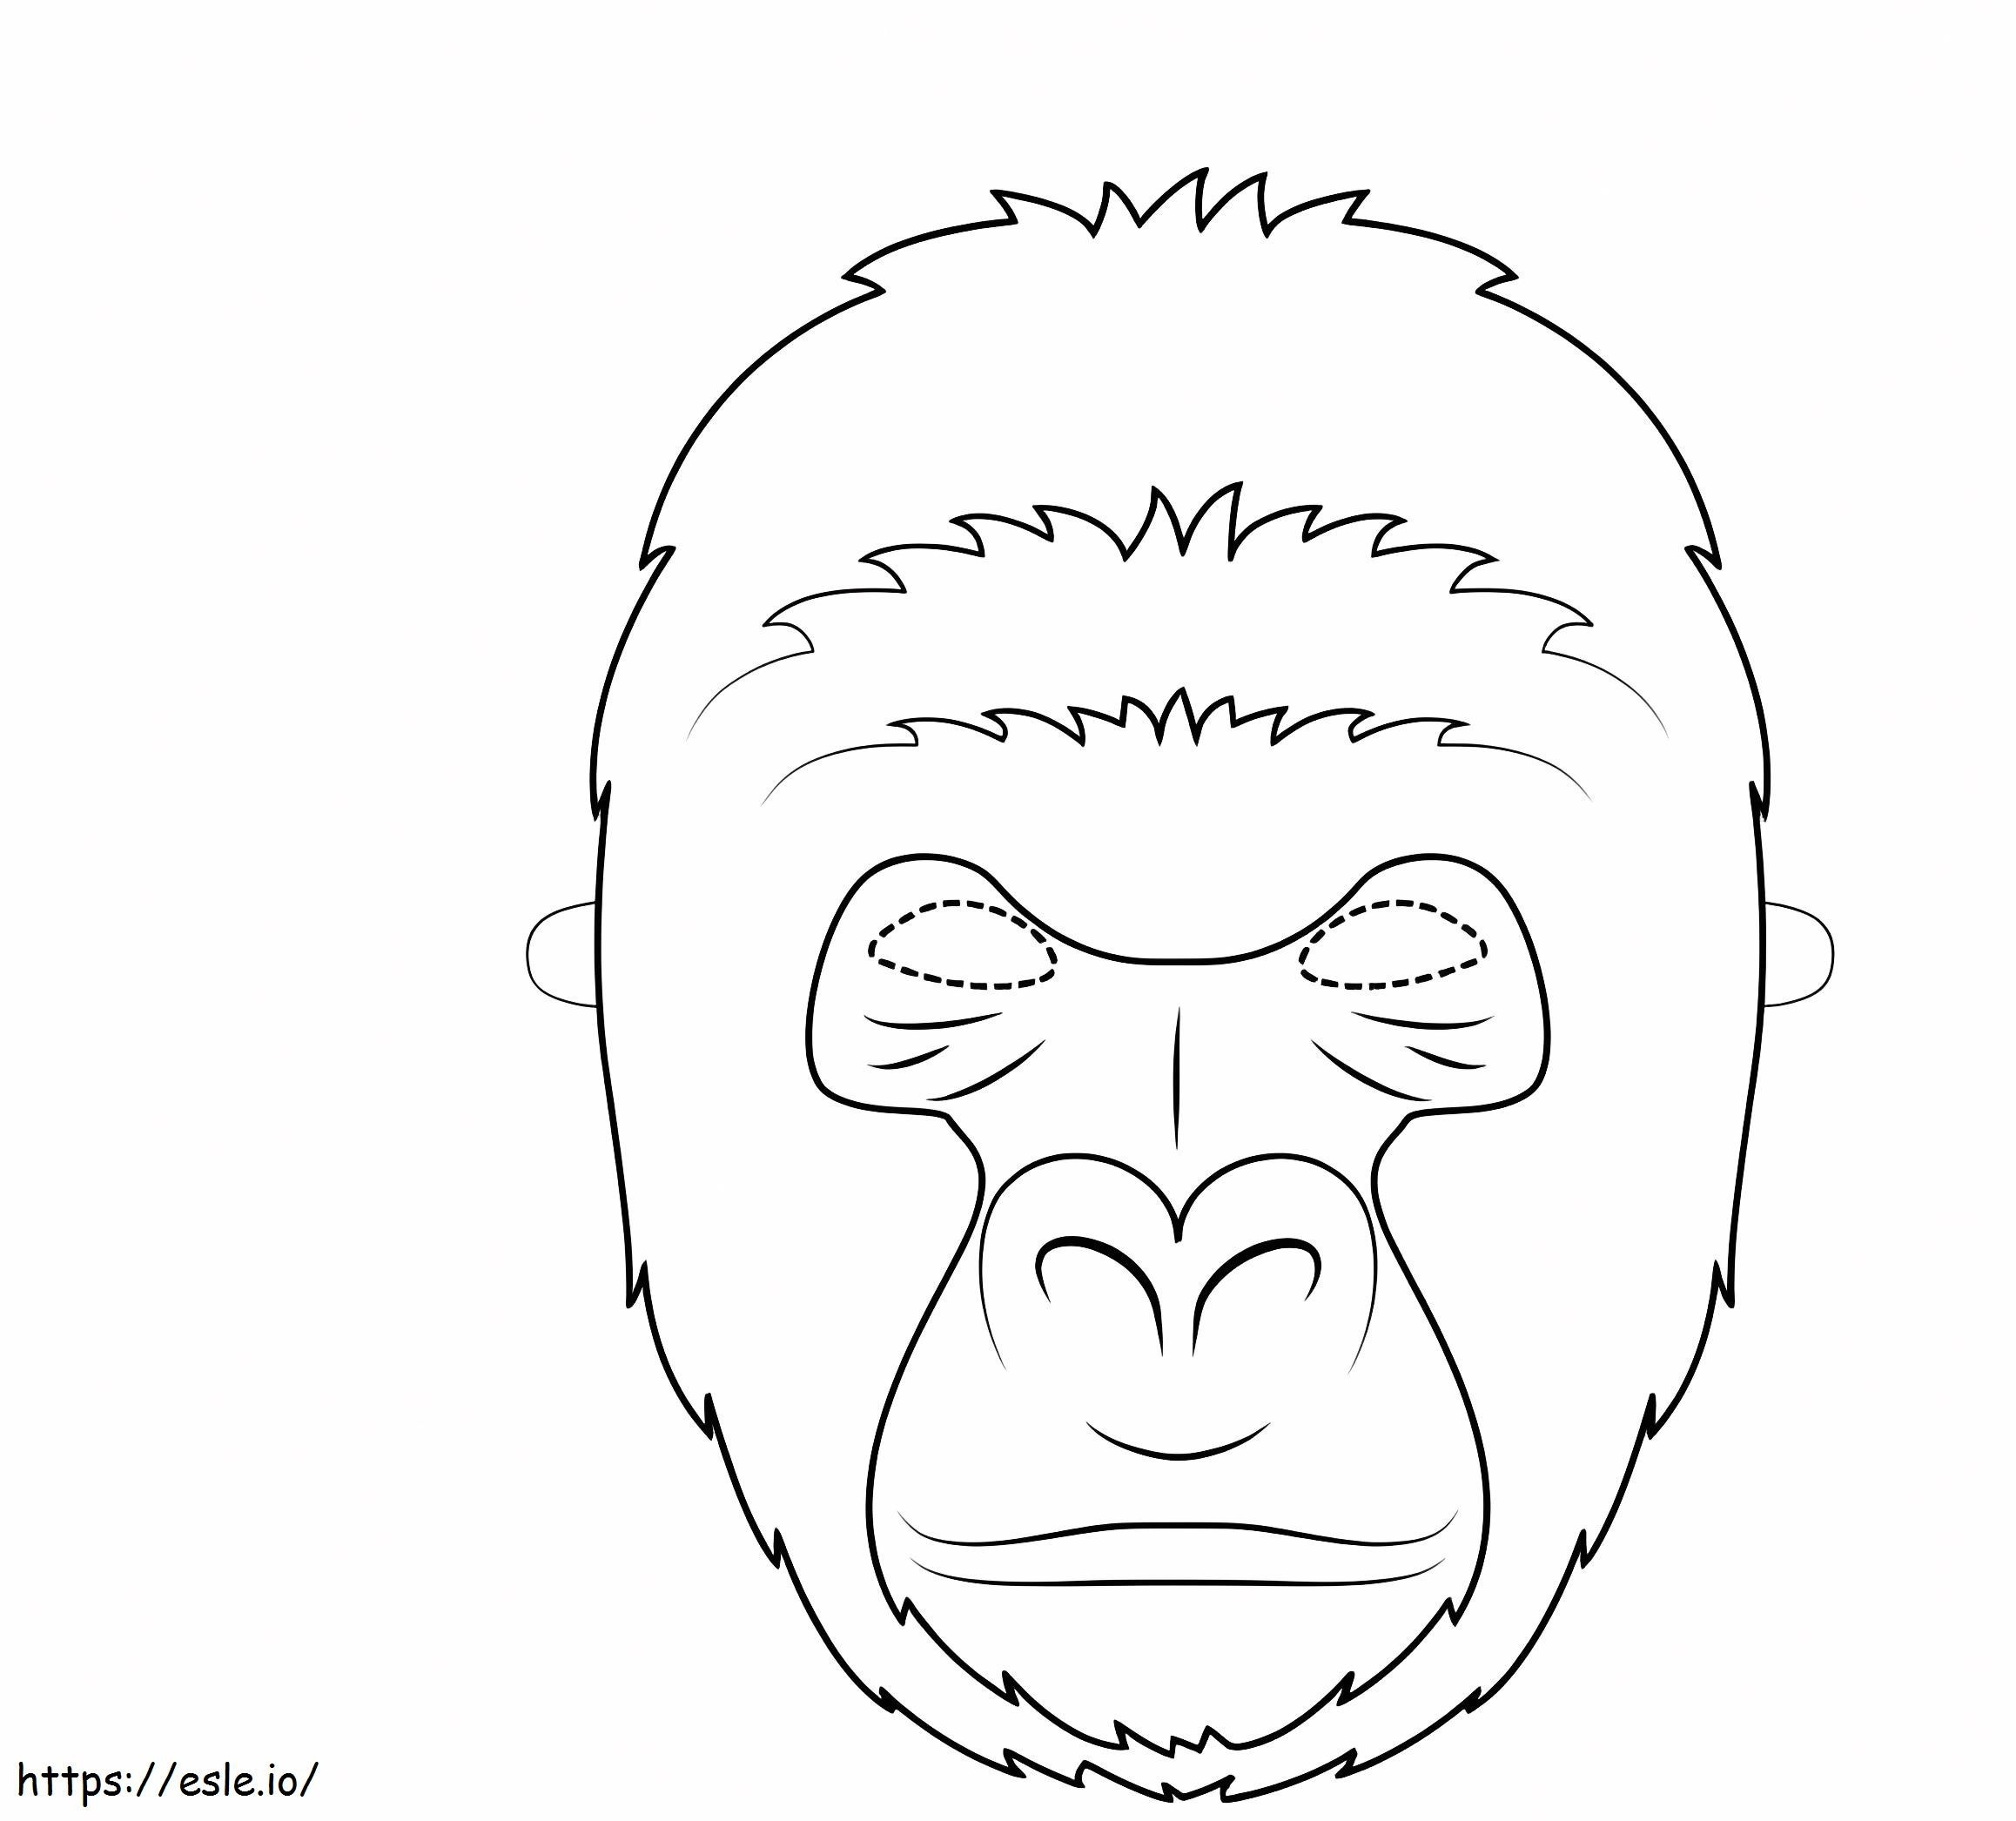 Uma máscara de gorila para colorir